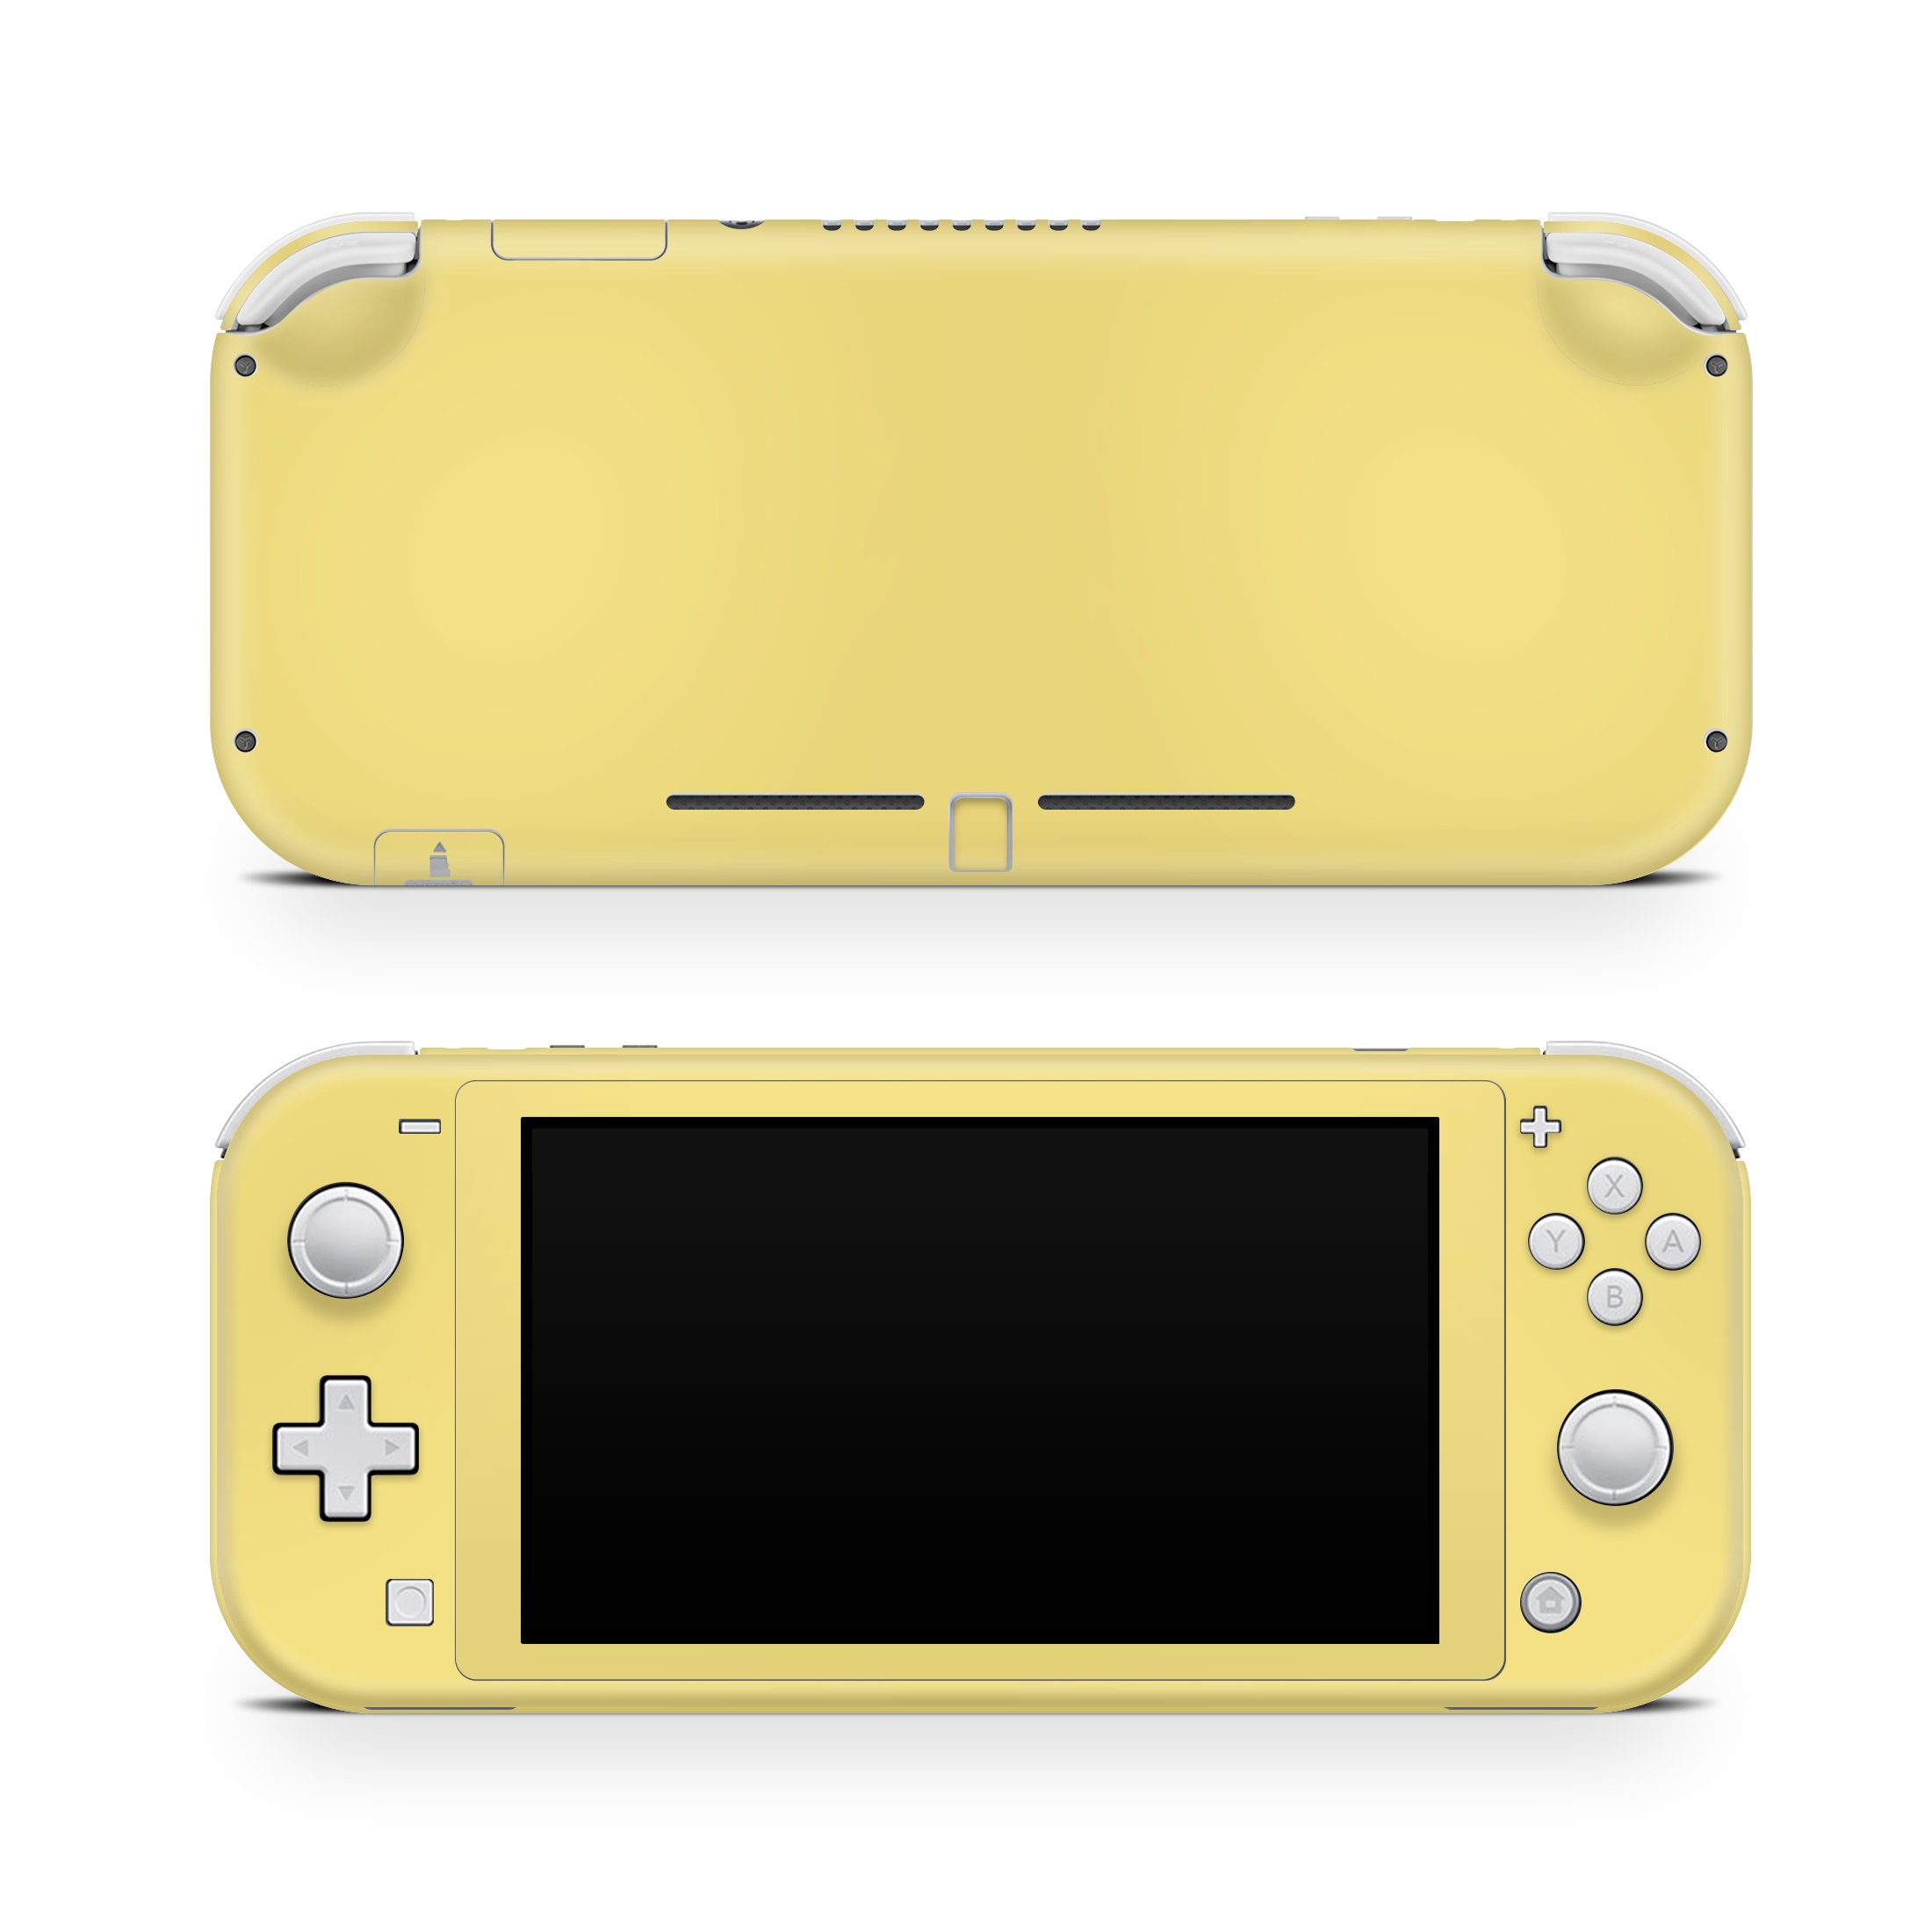 Nintendo switch lite yellow